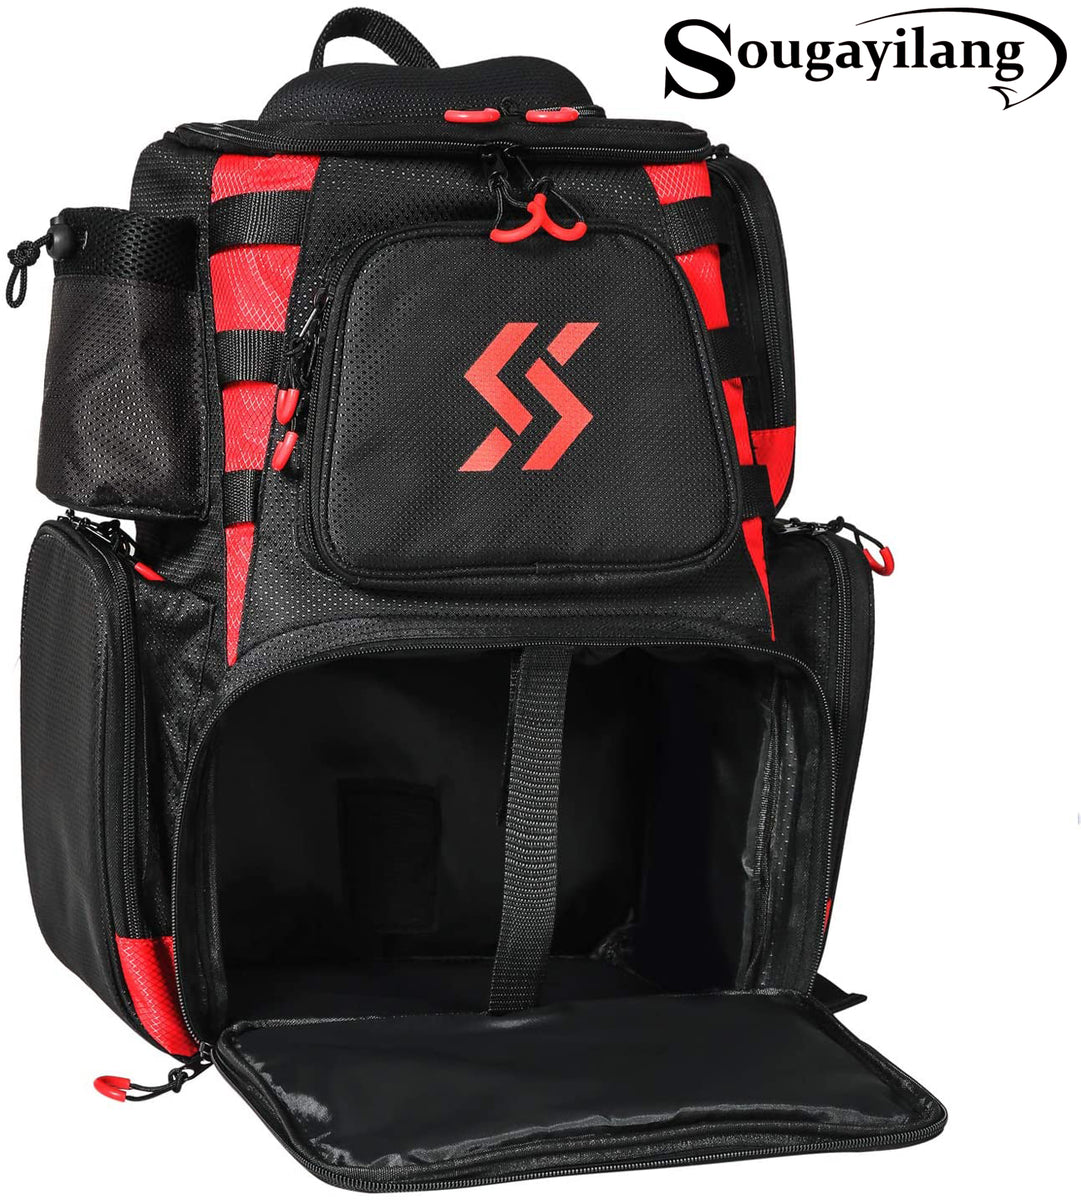 Sougayilang Fishing Tackle Backpack Waterproof Tackle Bag Storage with 4  Trays Tackle Box and Protective Rain Cover for Camping Hiking